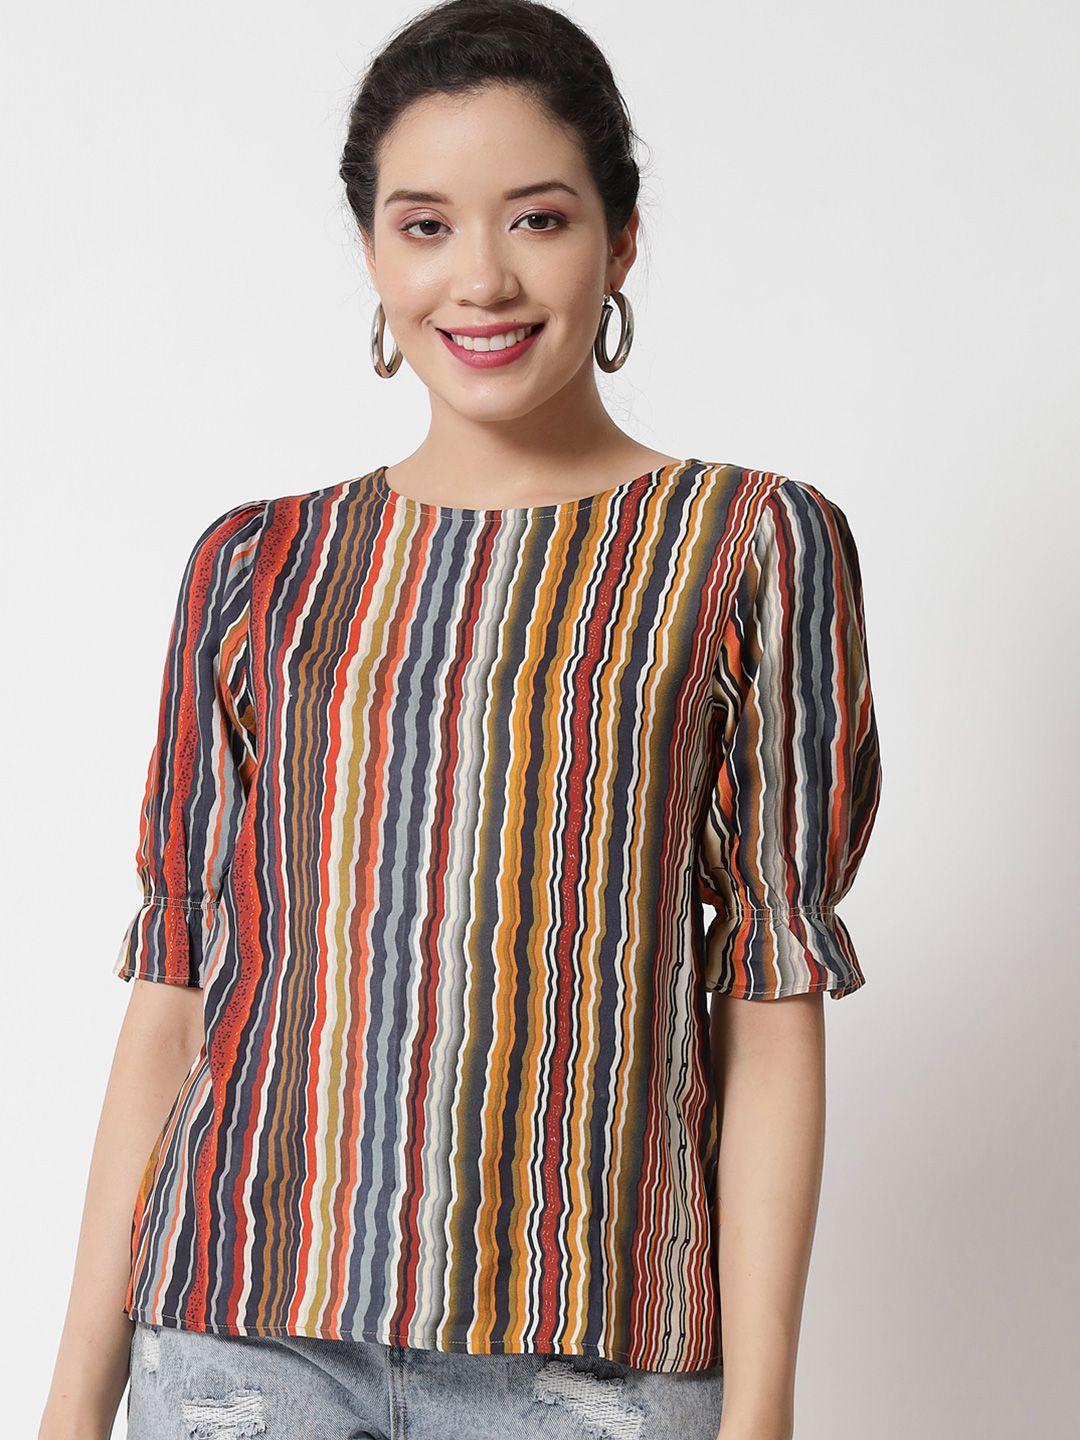 shopping queen multicoloured striped top